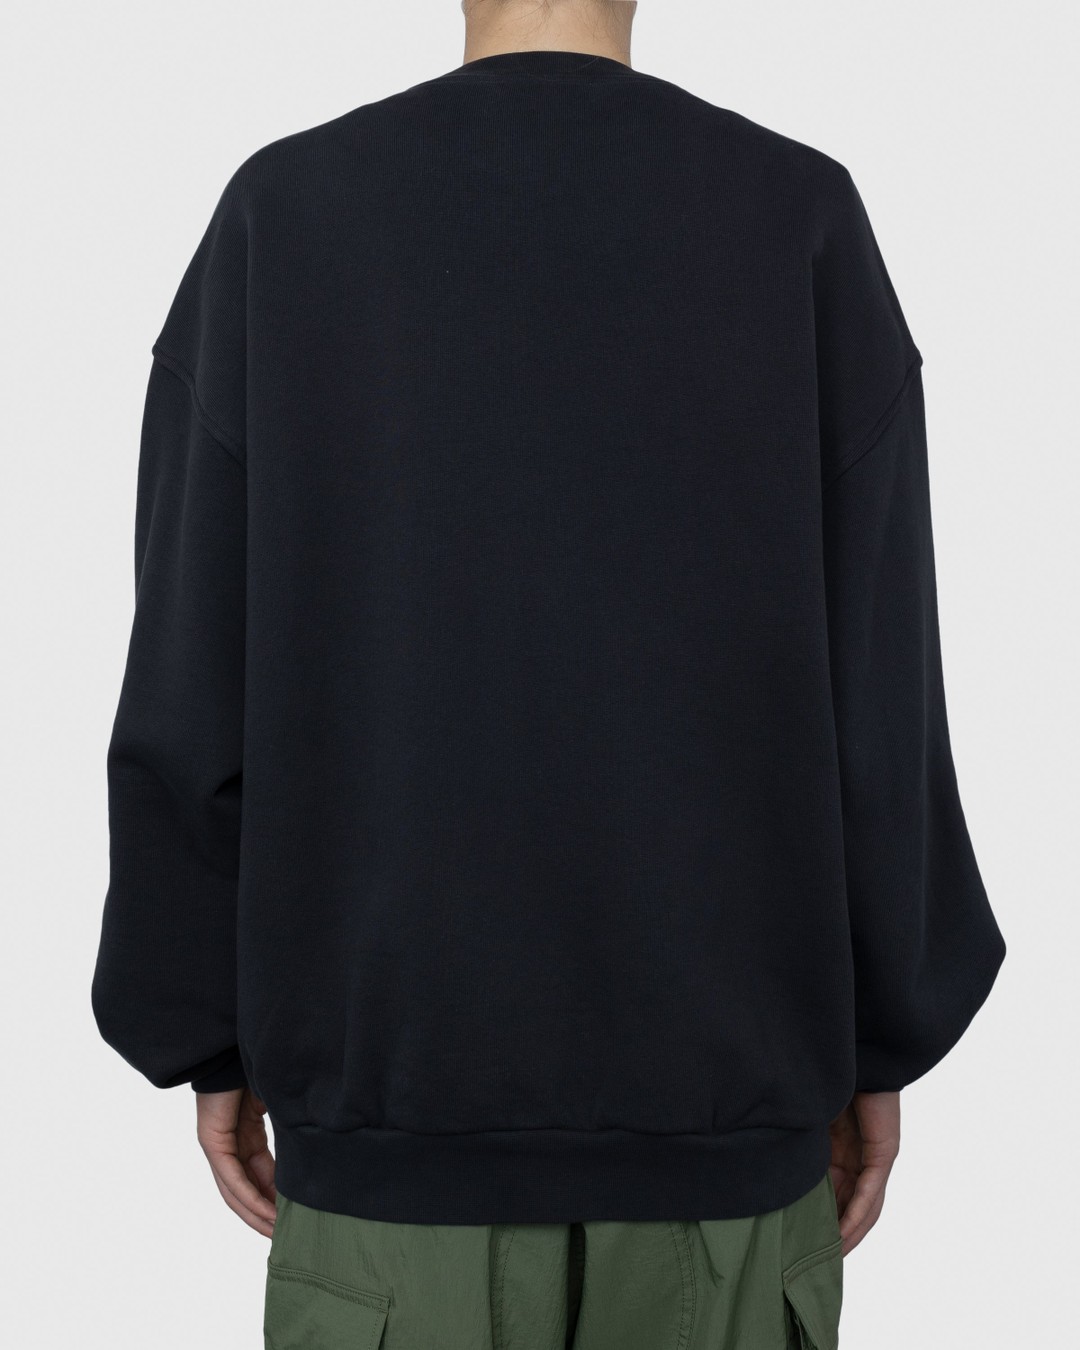 Acne Studios – Bubble Logo Crewneck Sweater Anthracite Grey - Sweatshirts - Black - Image 4